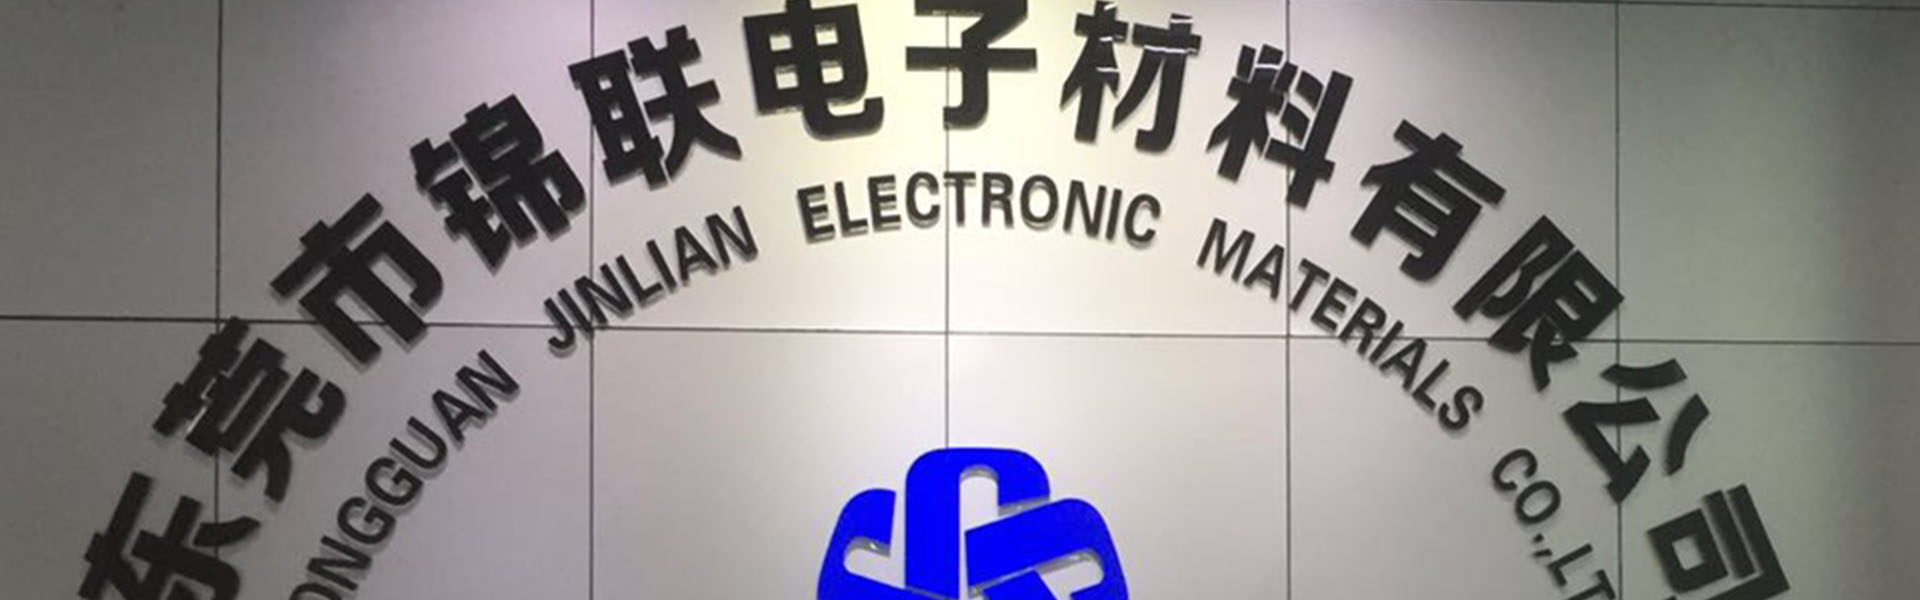 Box blister, vassoio,nastro supporto,Dongguan Jinlian Electronic Materials Co., Ltd